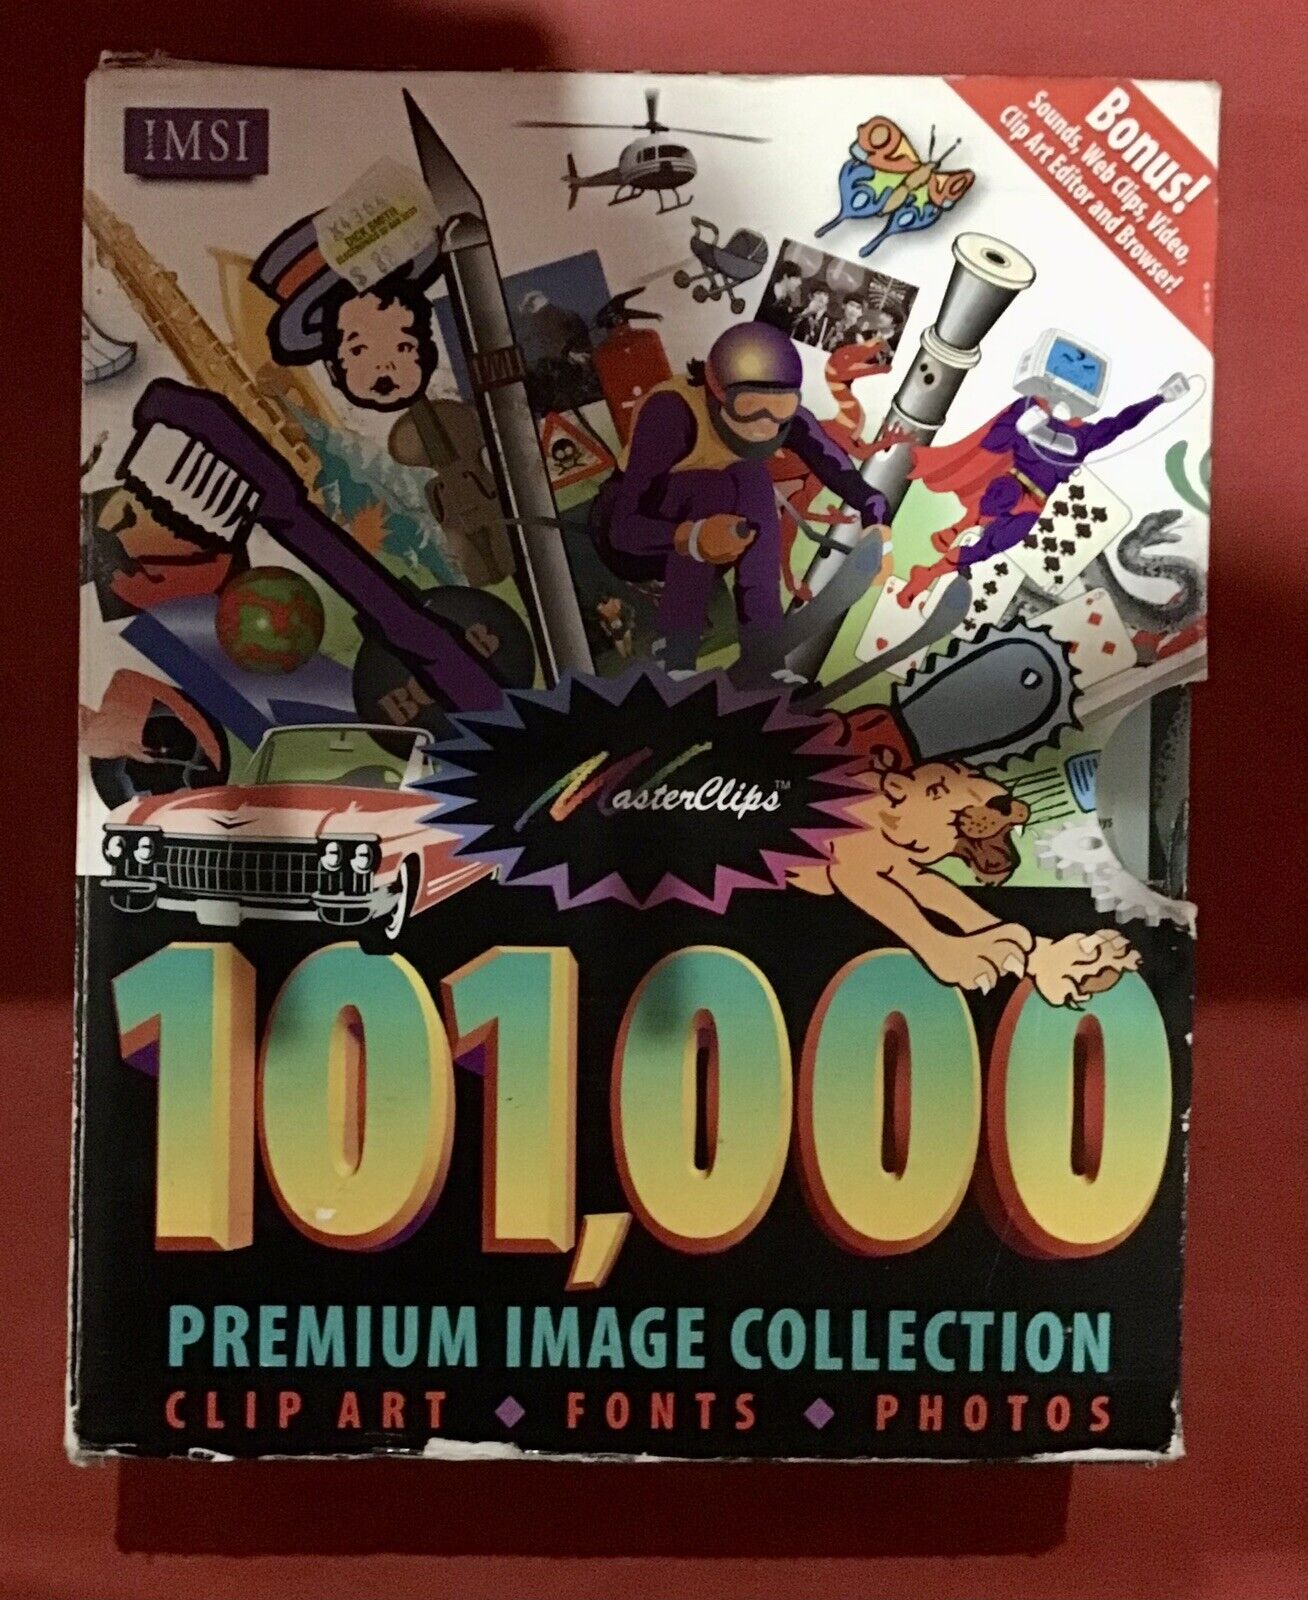 Masterclips Premium Image Collection Retro Vintage Software Box Set 